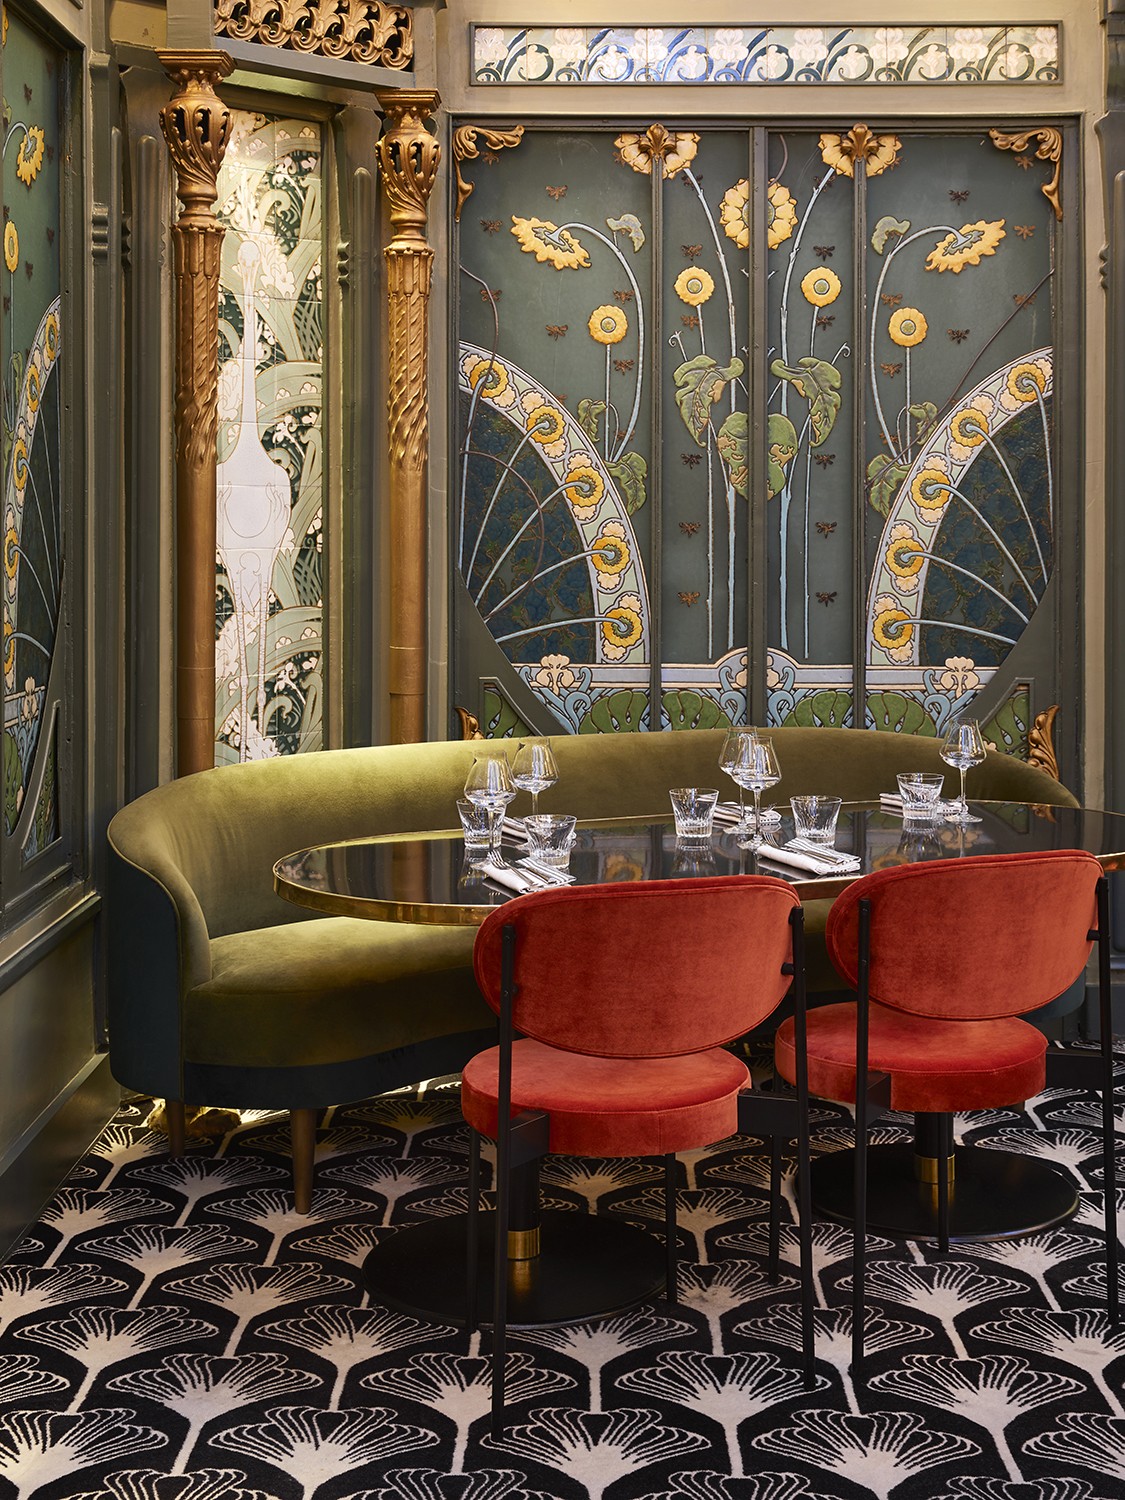 Beefbar Paris - A Masterpiece Design Project By Humbert & Poyet